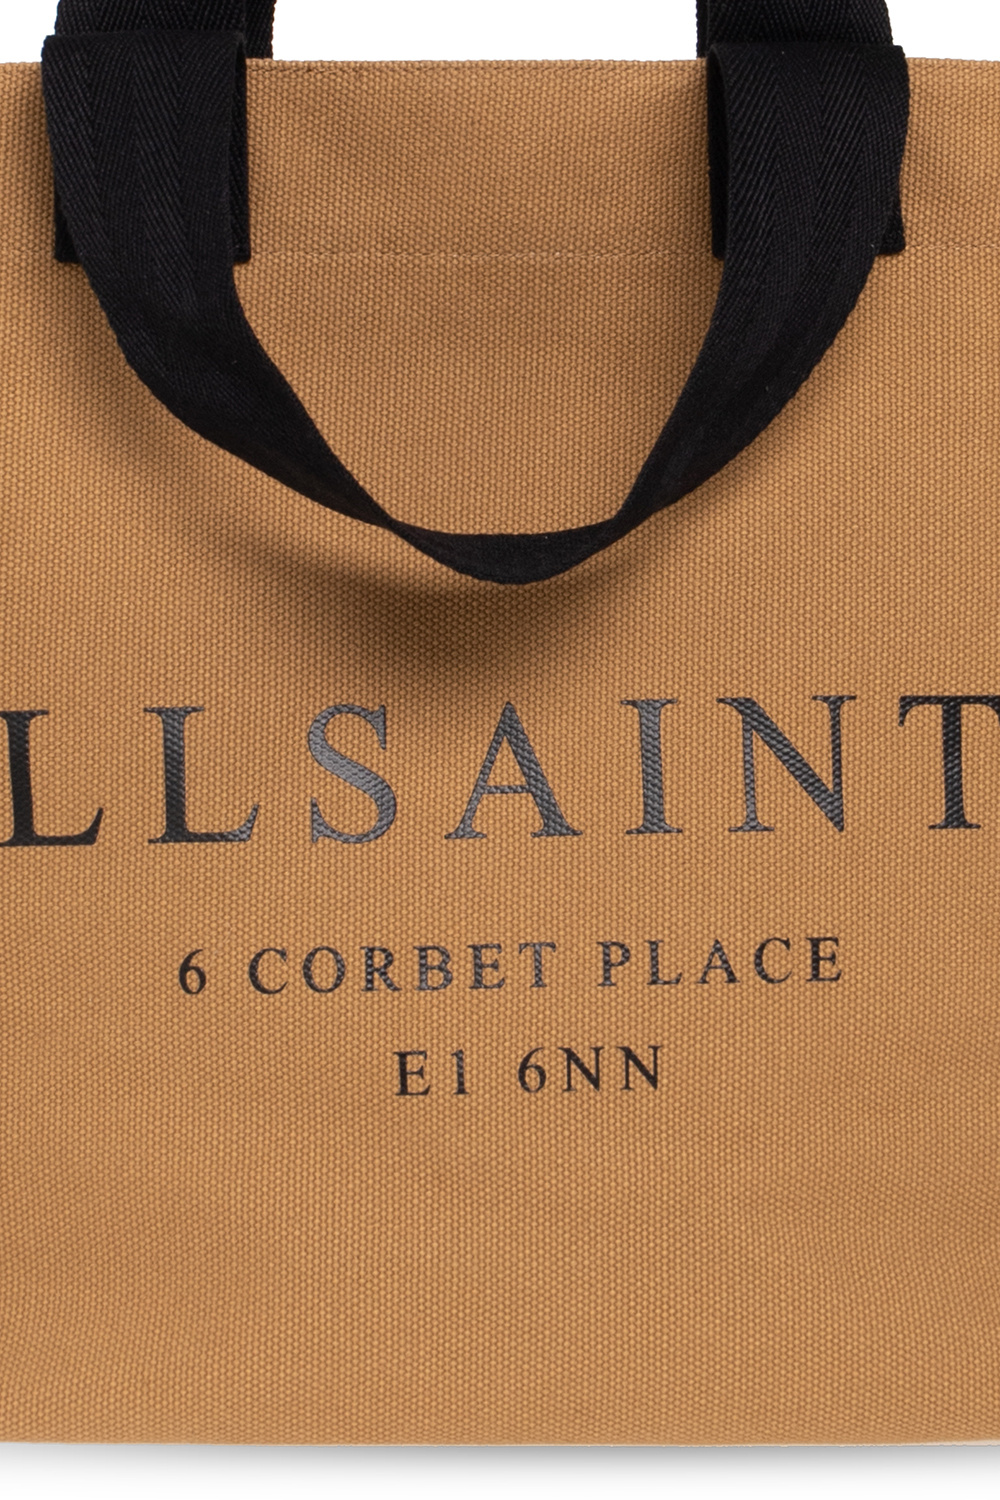 StclaircomoShops, AllSaints 'Ali' shopper bag